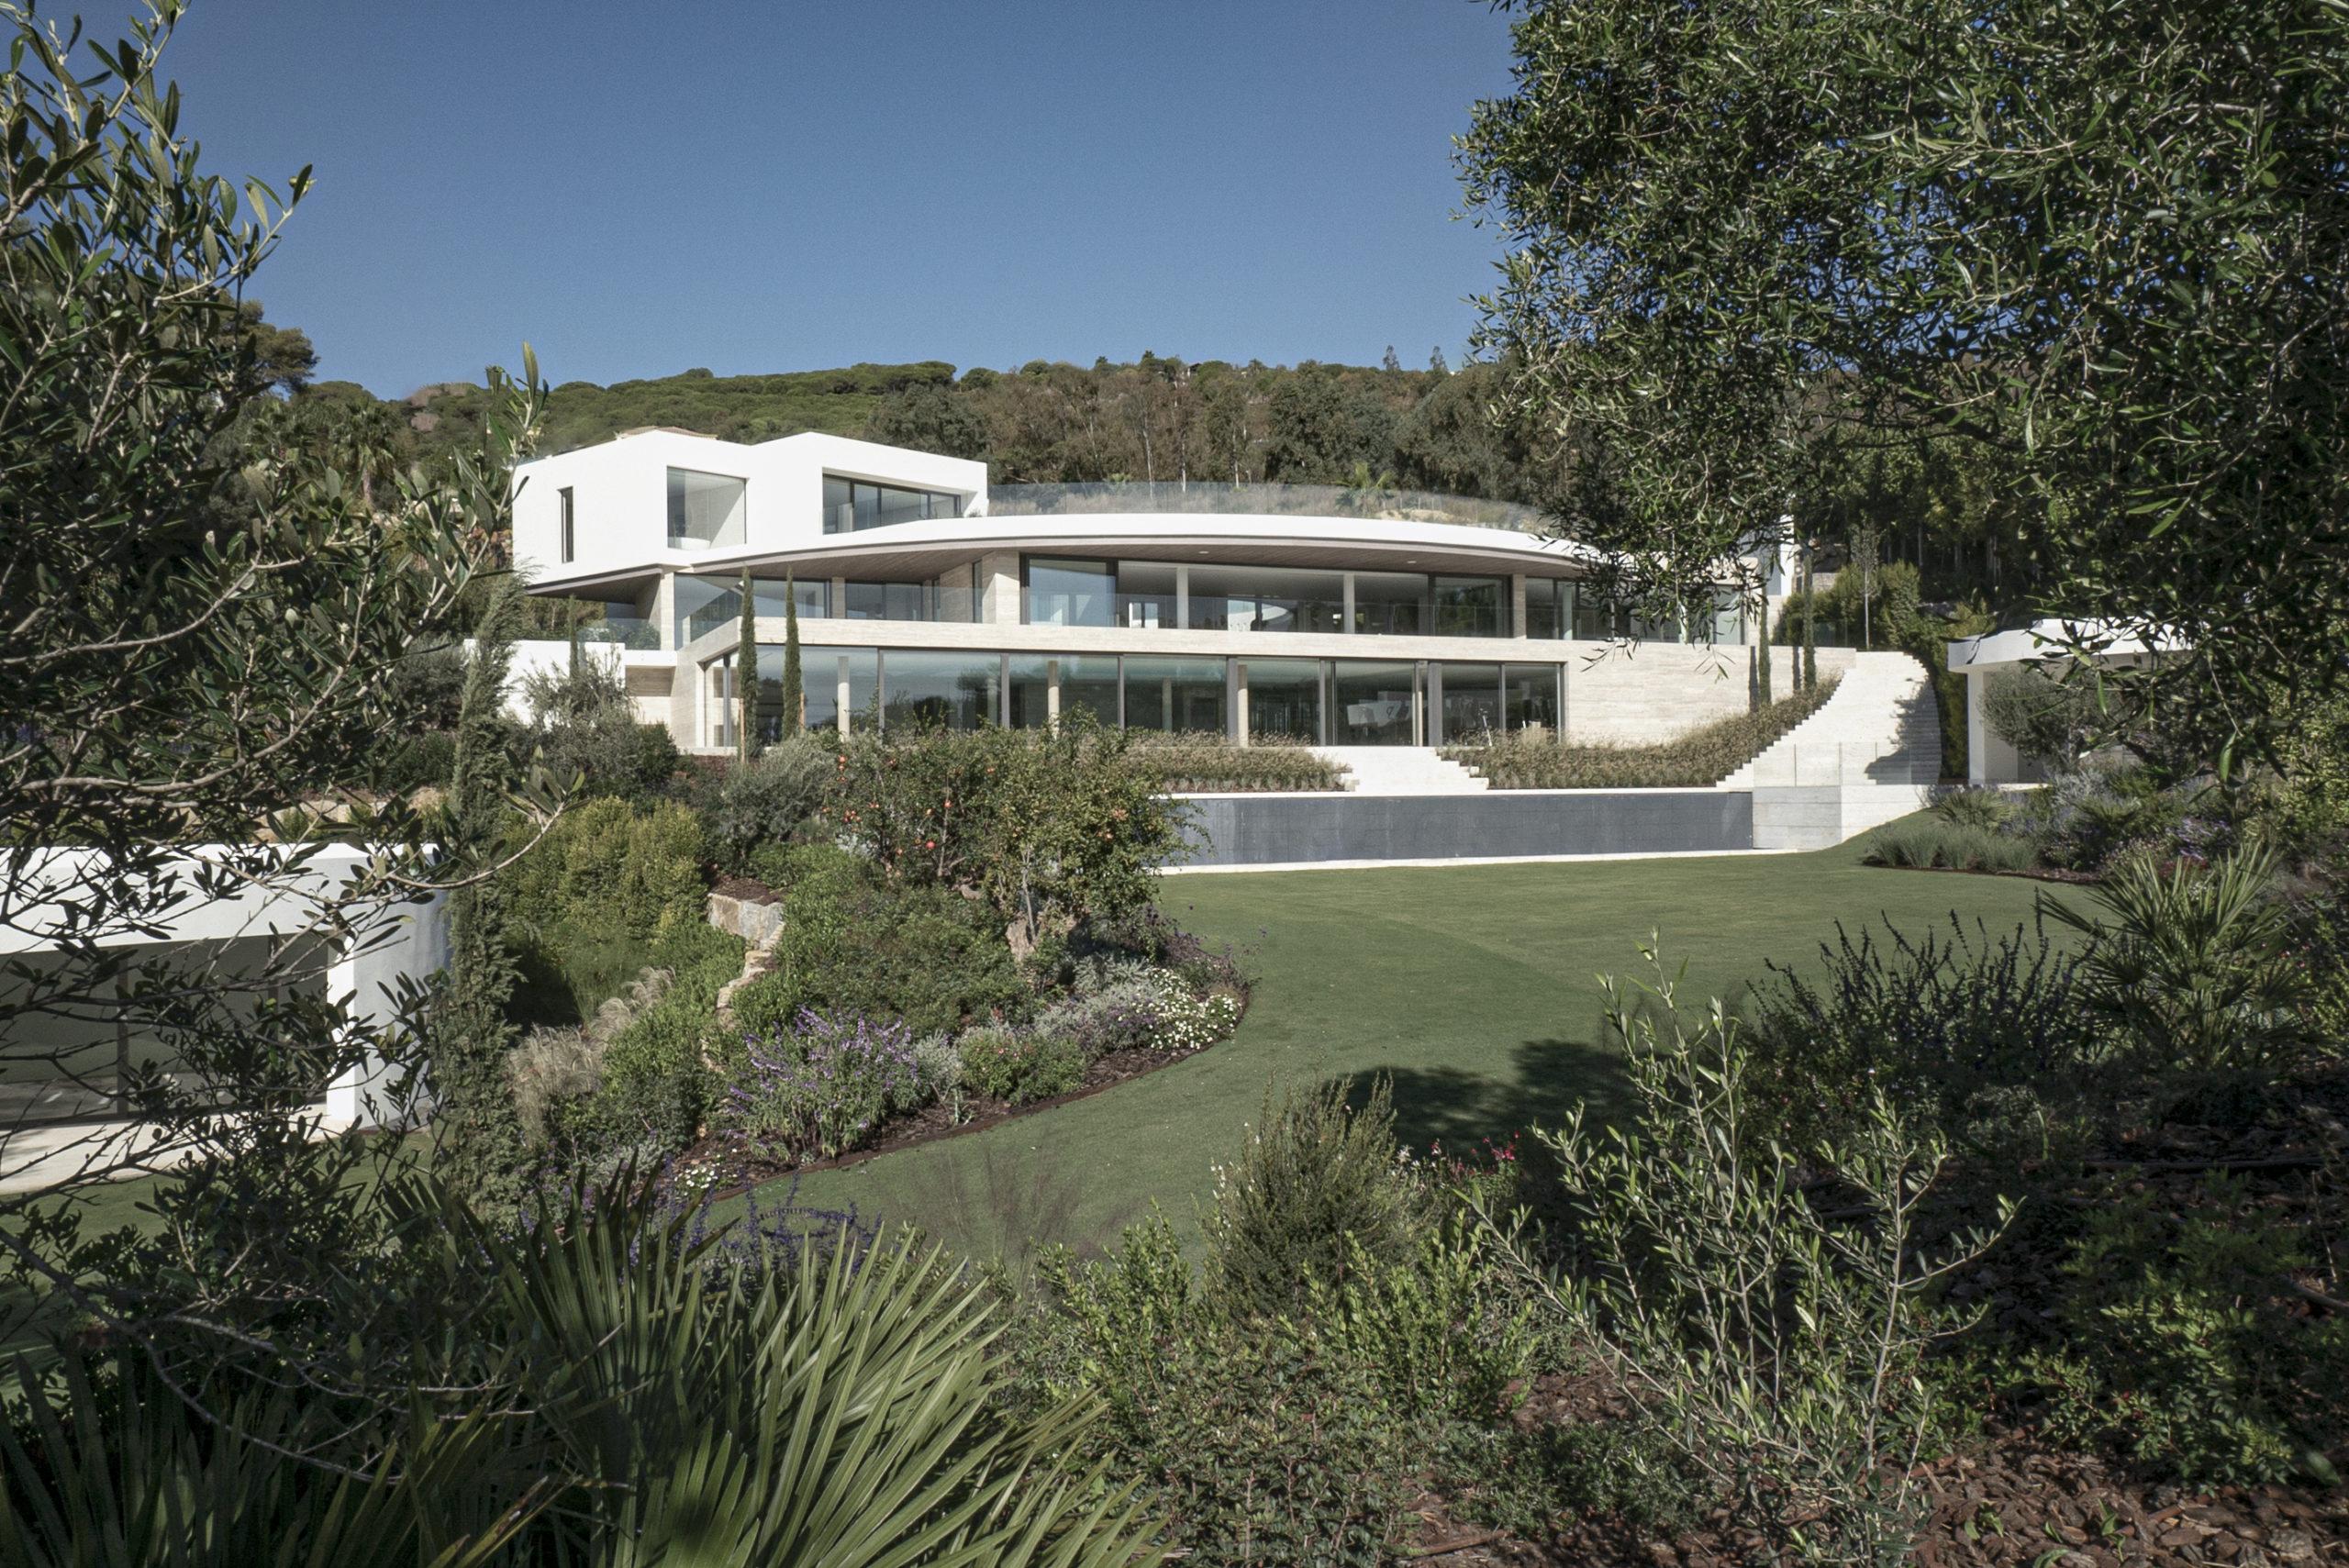 Luxury Real Estate In Sotogrande - Villas For Sale In A Gated Community In Costa del Sol, Spain